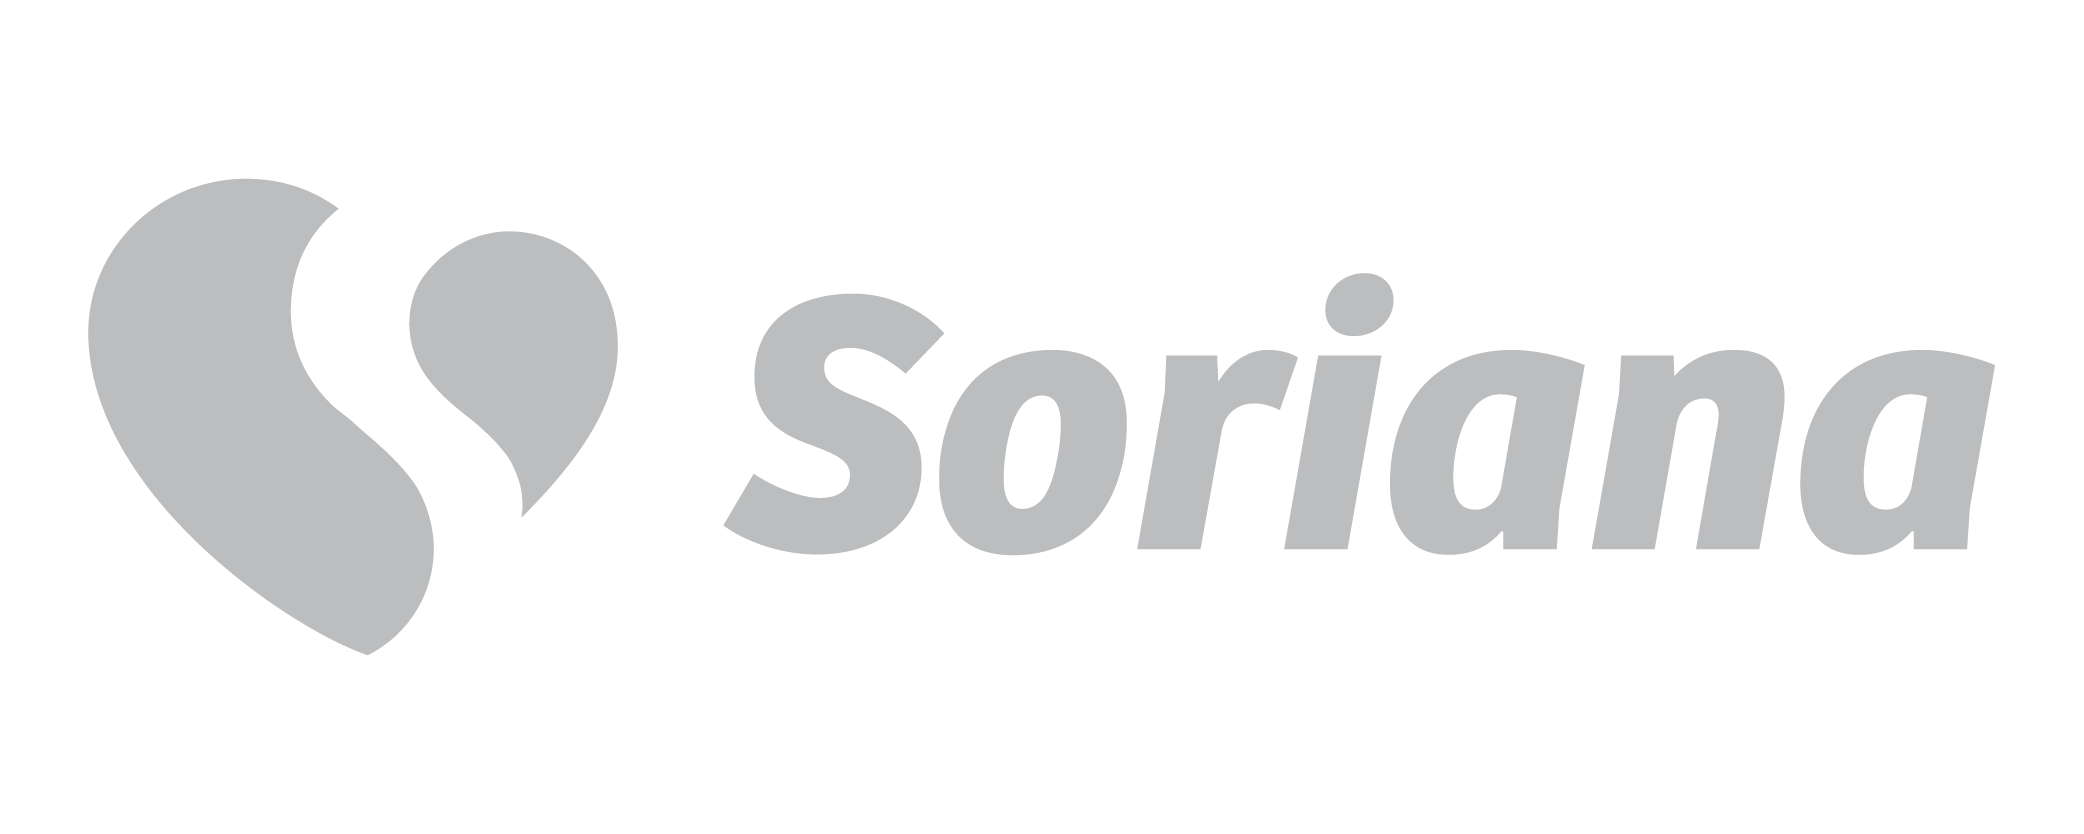 Supers_Soriana-1